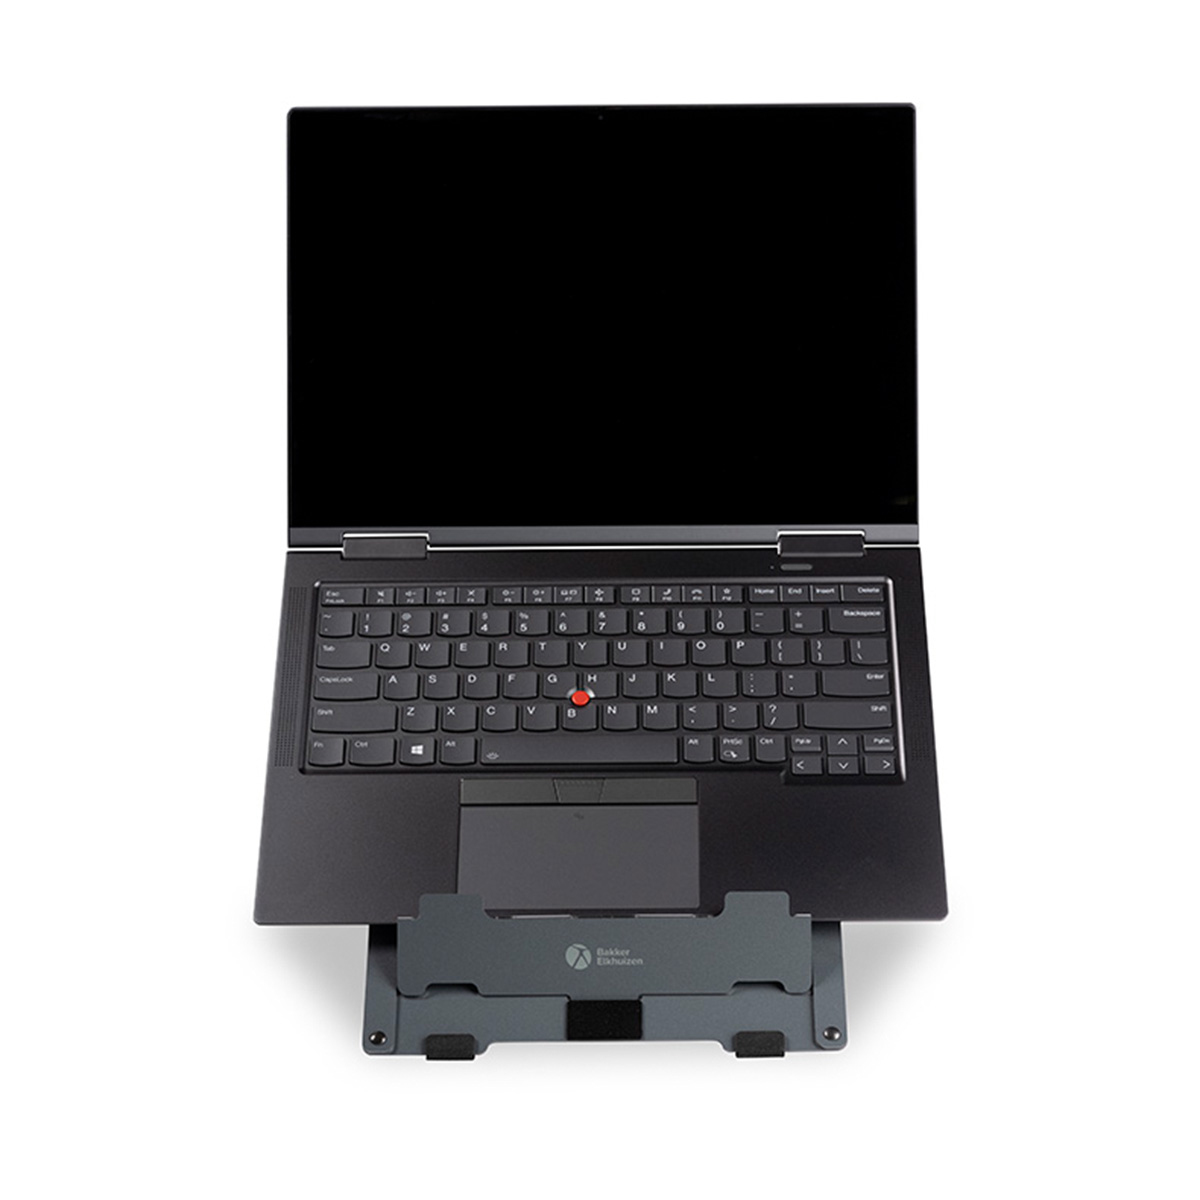 Ergo-Q 160 Laptop Stand